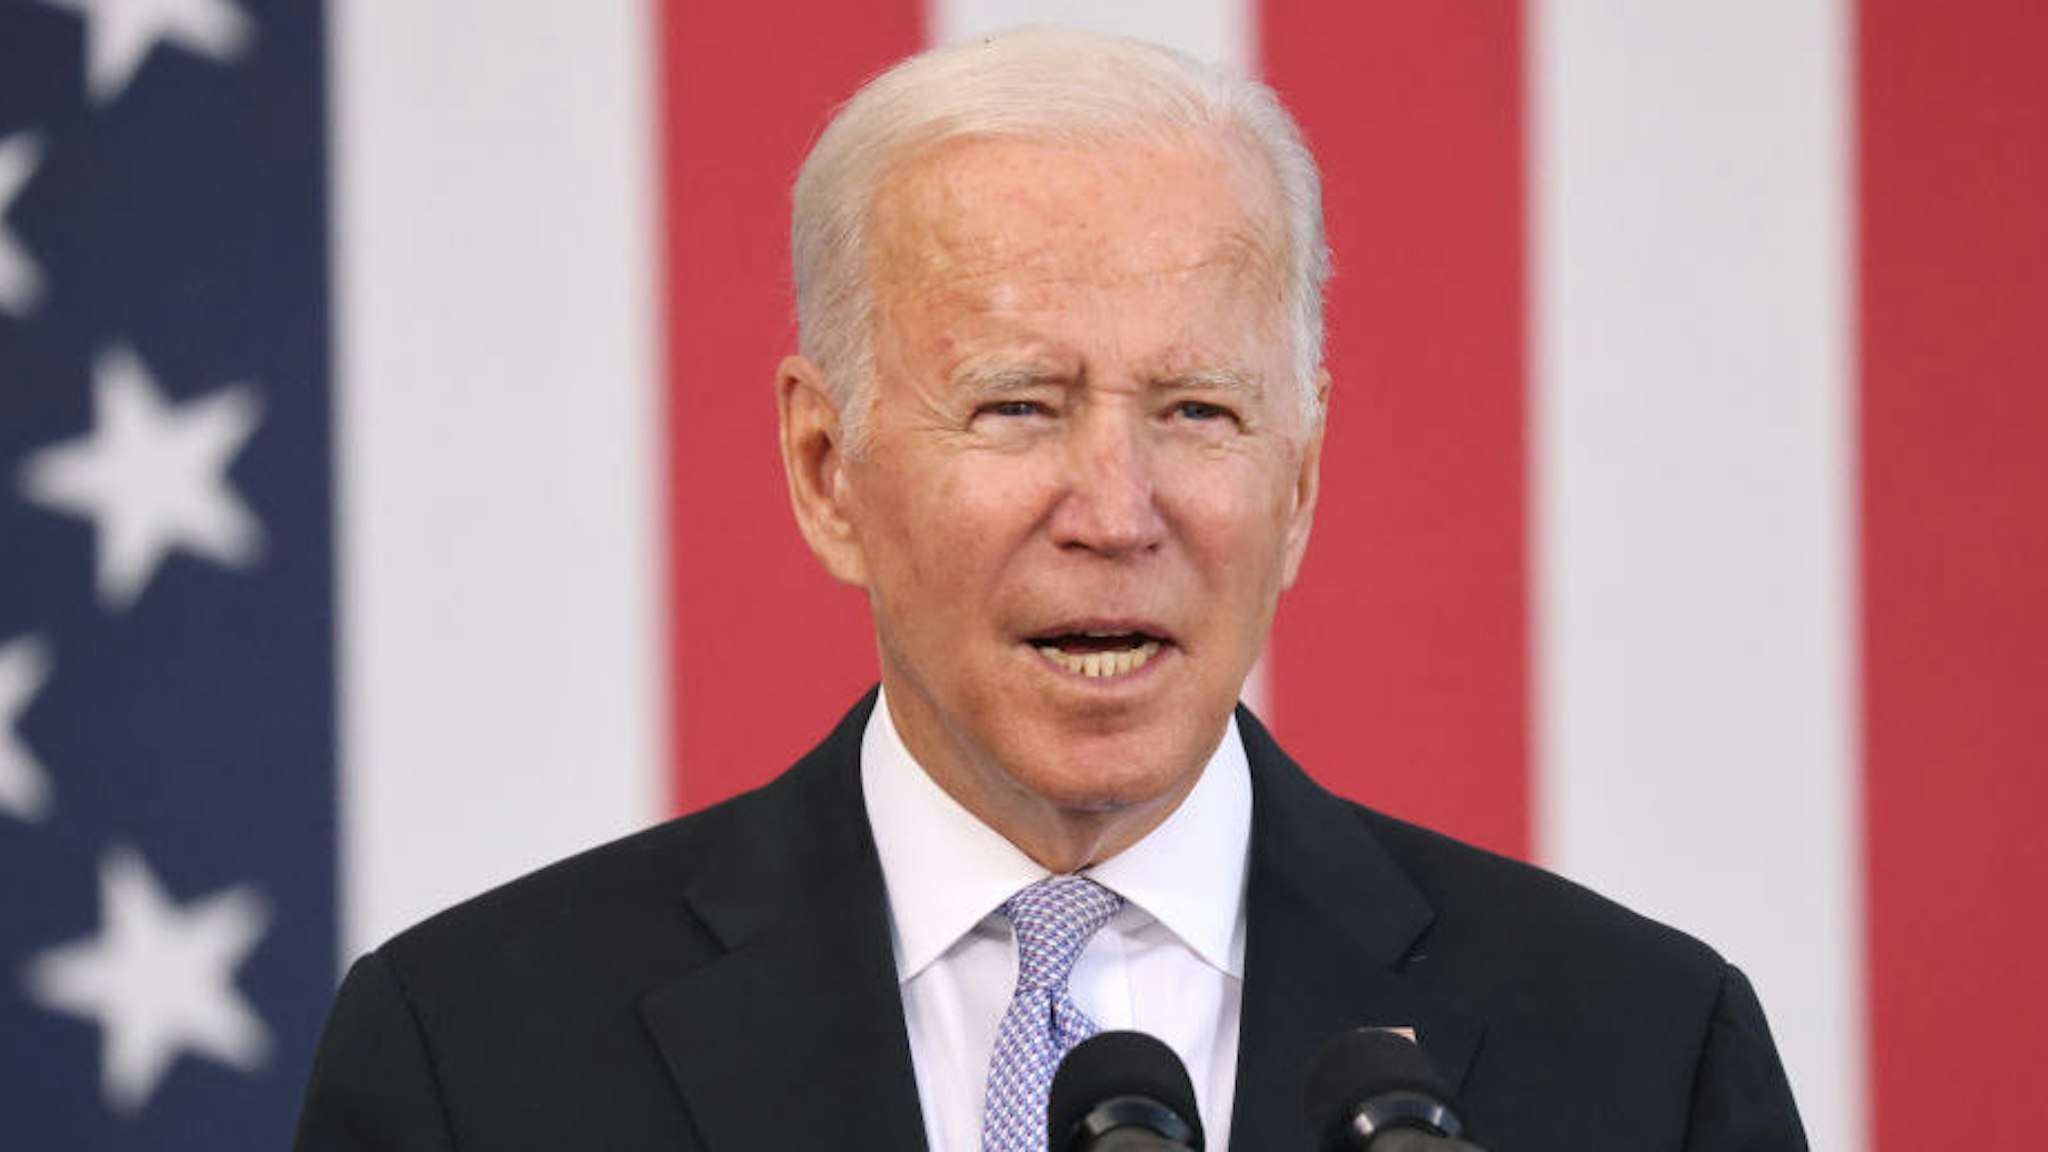 President Joe Biden speaks at an event at the Electric City Trolley Museum in Scranton on October 20, 2021 in Scranton, Pennsylvania.